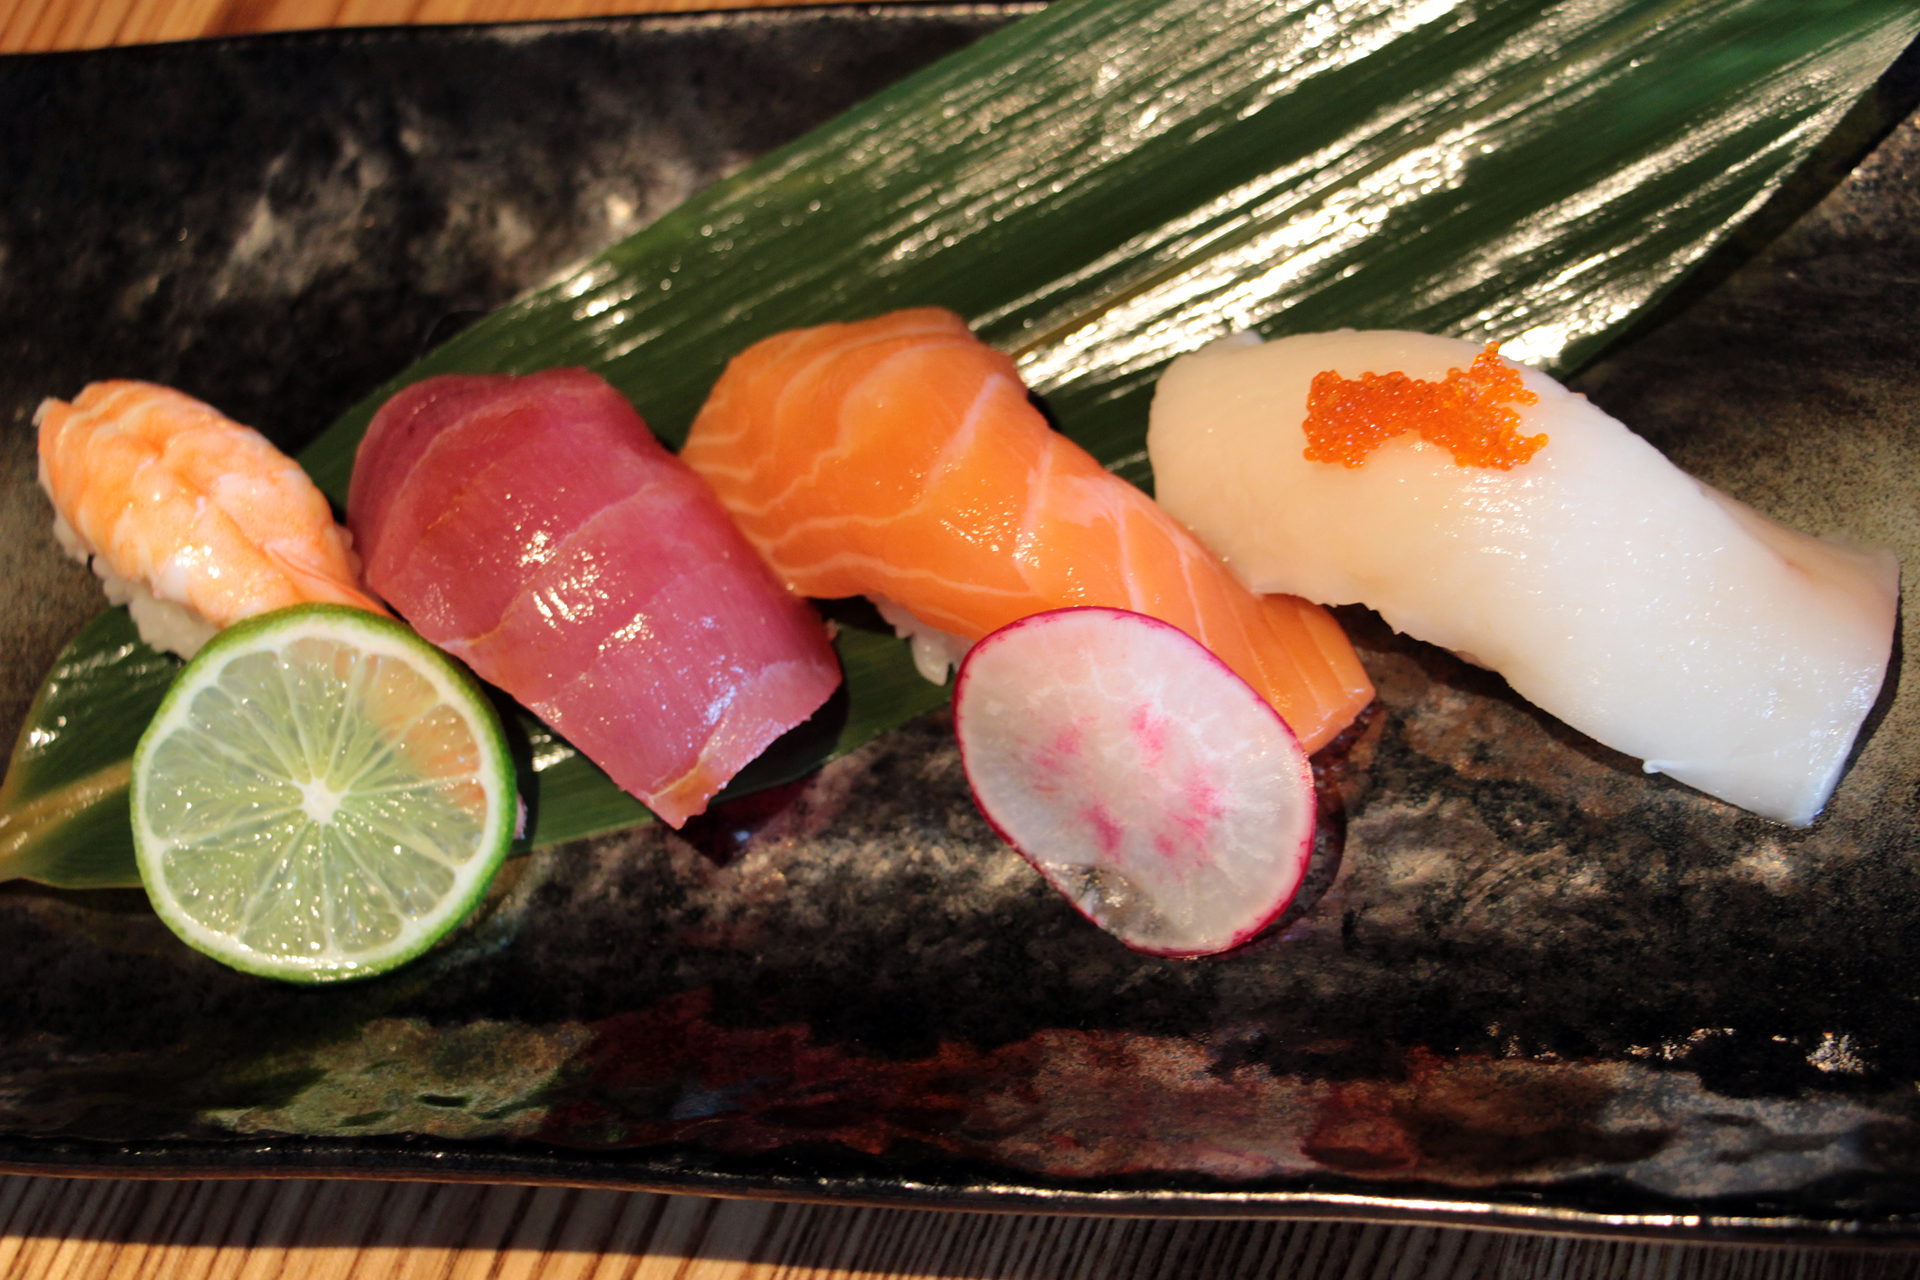 Sushi from the Sushi Sashimi Combination lunch.